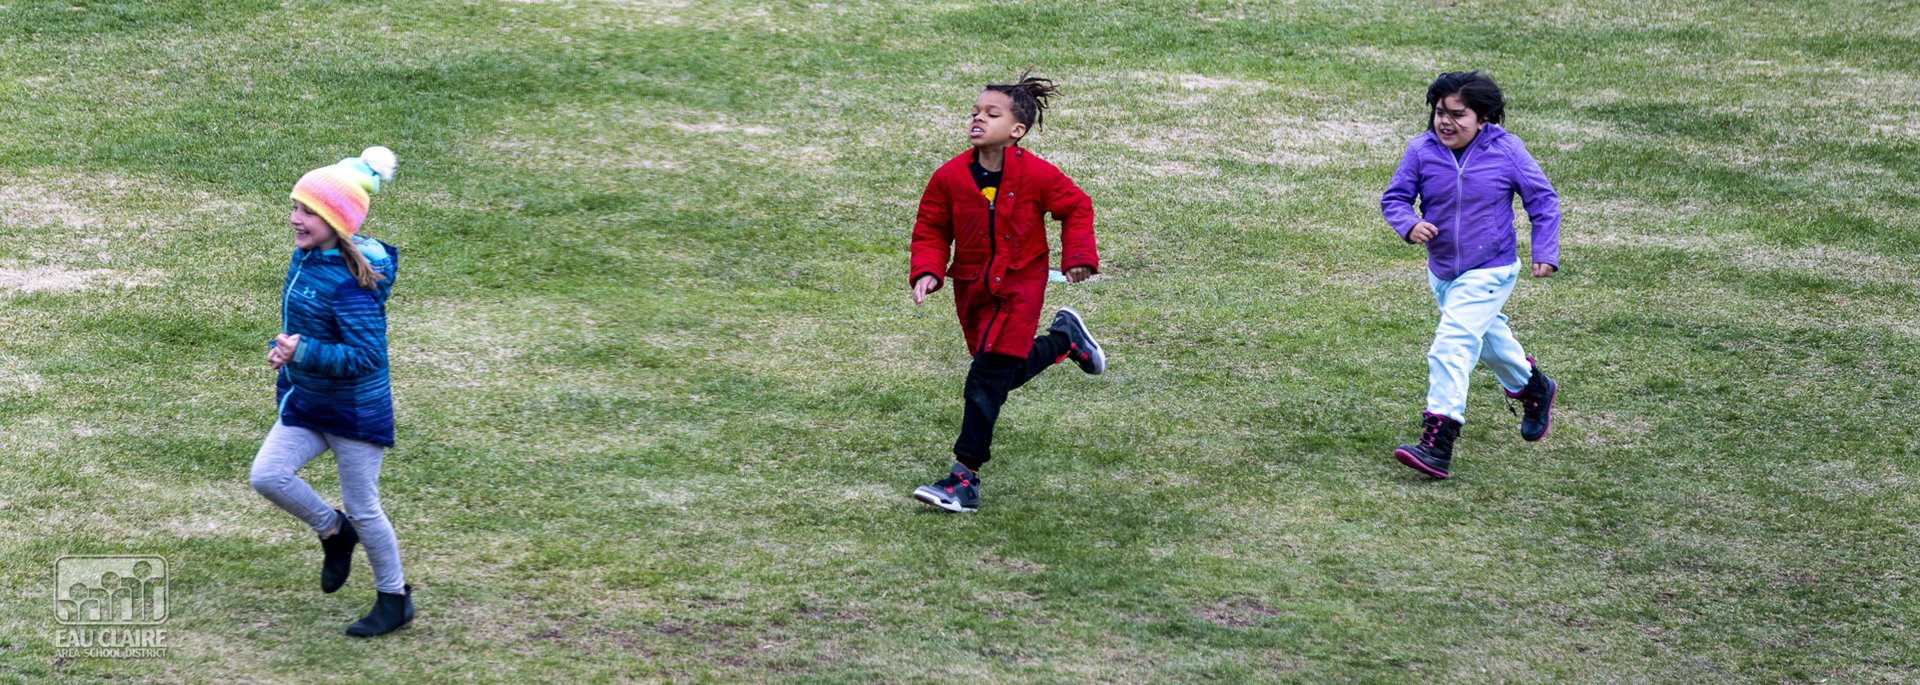 students running on grass